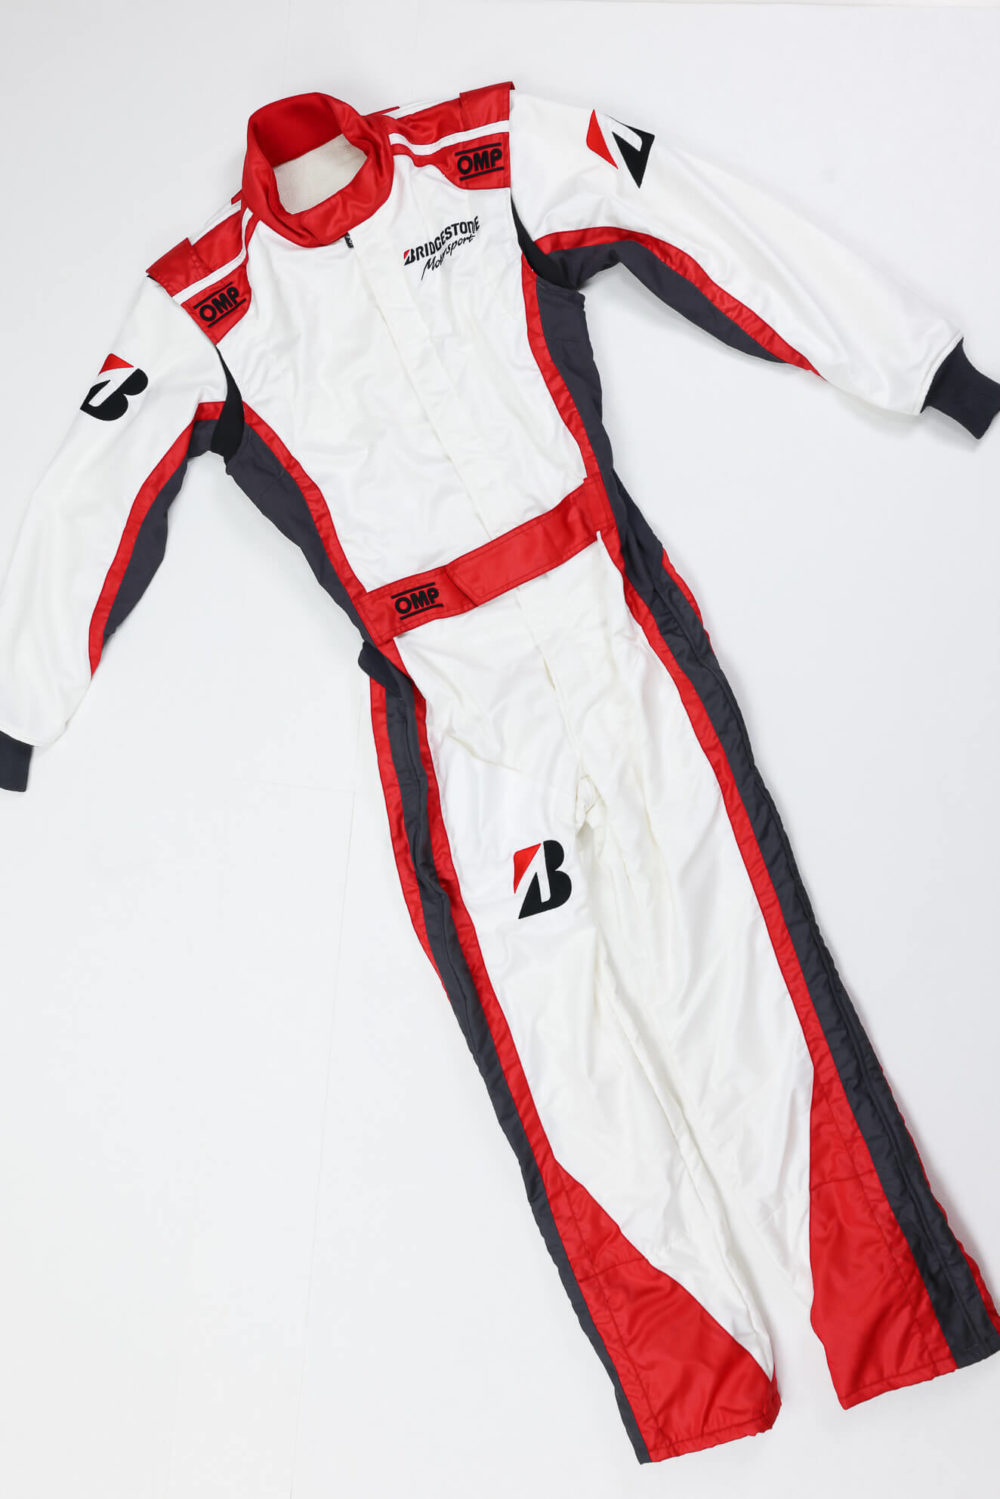 OMP オリジナルレーシングスーツ製作